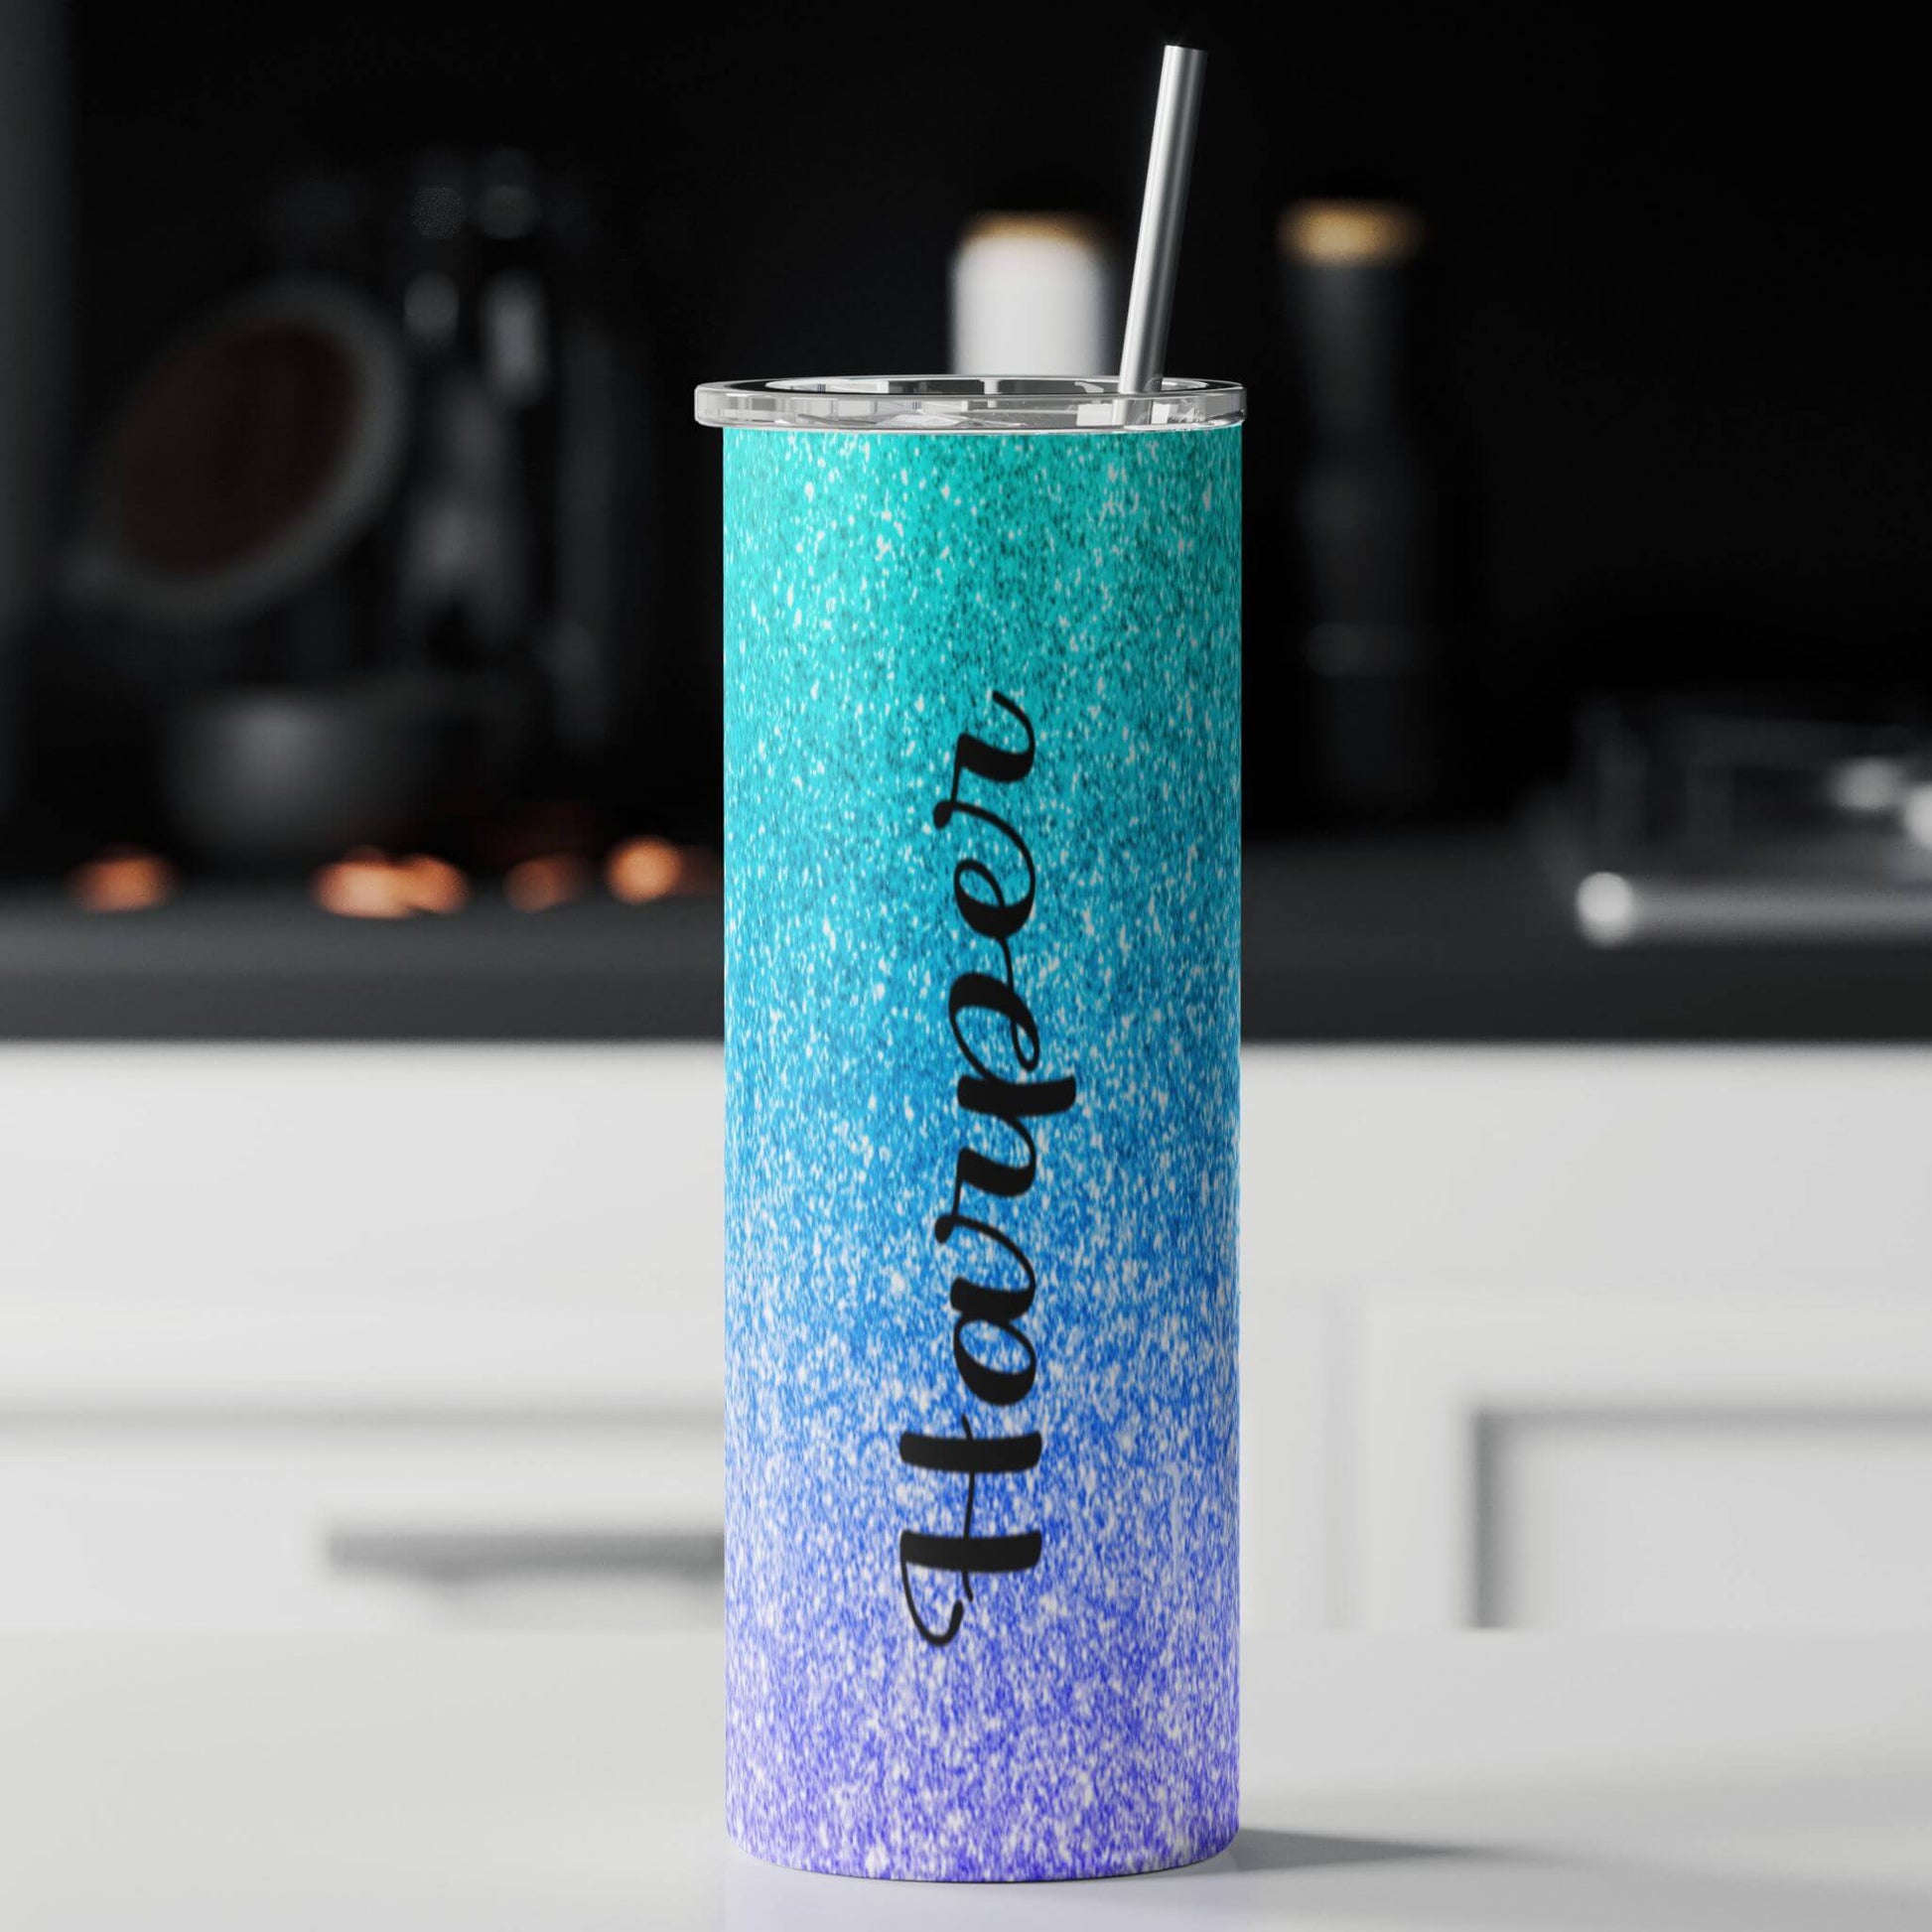 Buy 20 oz Kupresso Holographic Glitter Sublimation Tumbler Now Blue